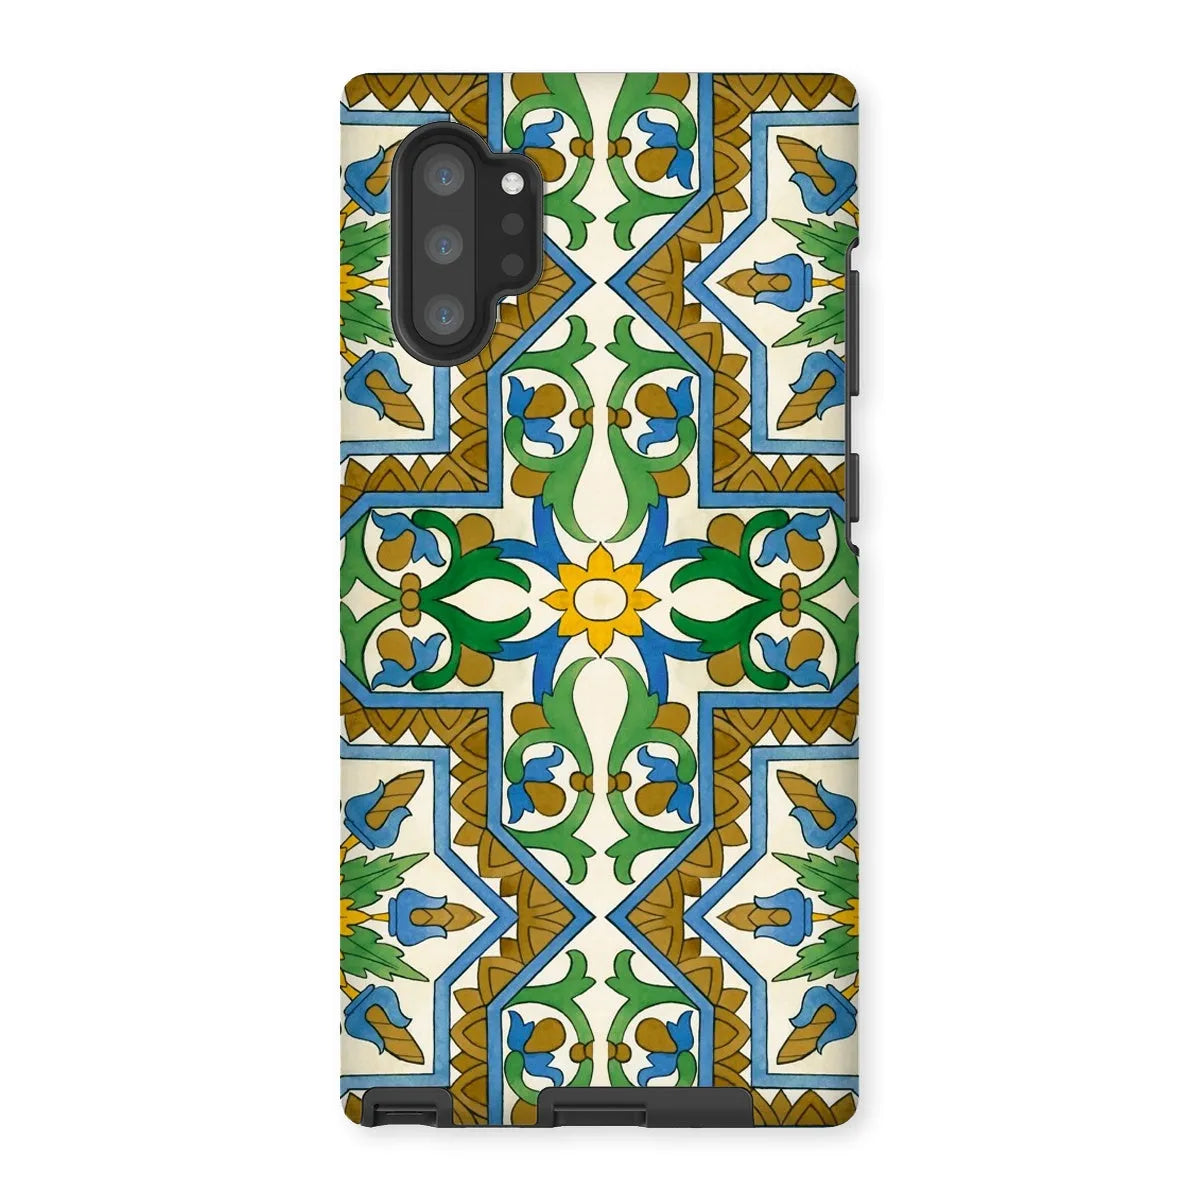 Moreish Moorish - Spanish Aesthetic Pattern Phone Case - Samsung Galaxy Note 10p / Matte - Mobile Phone Cases